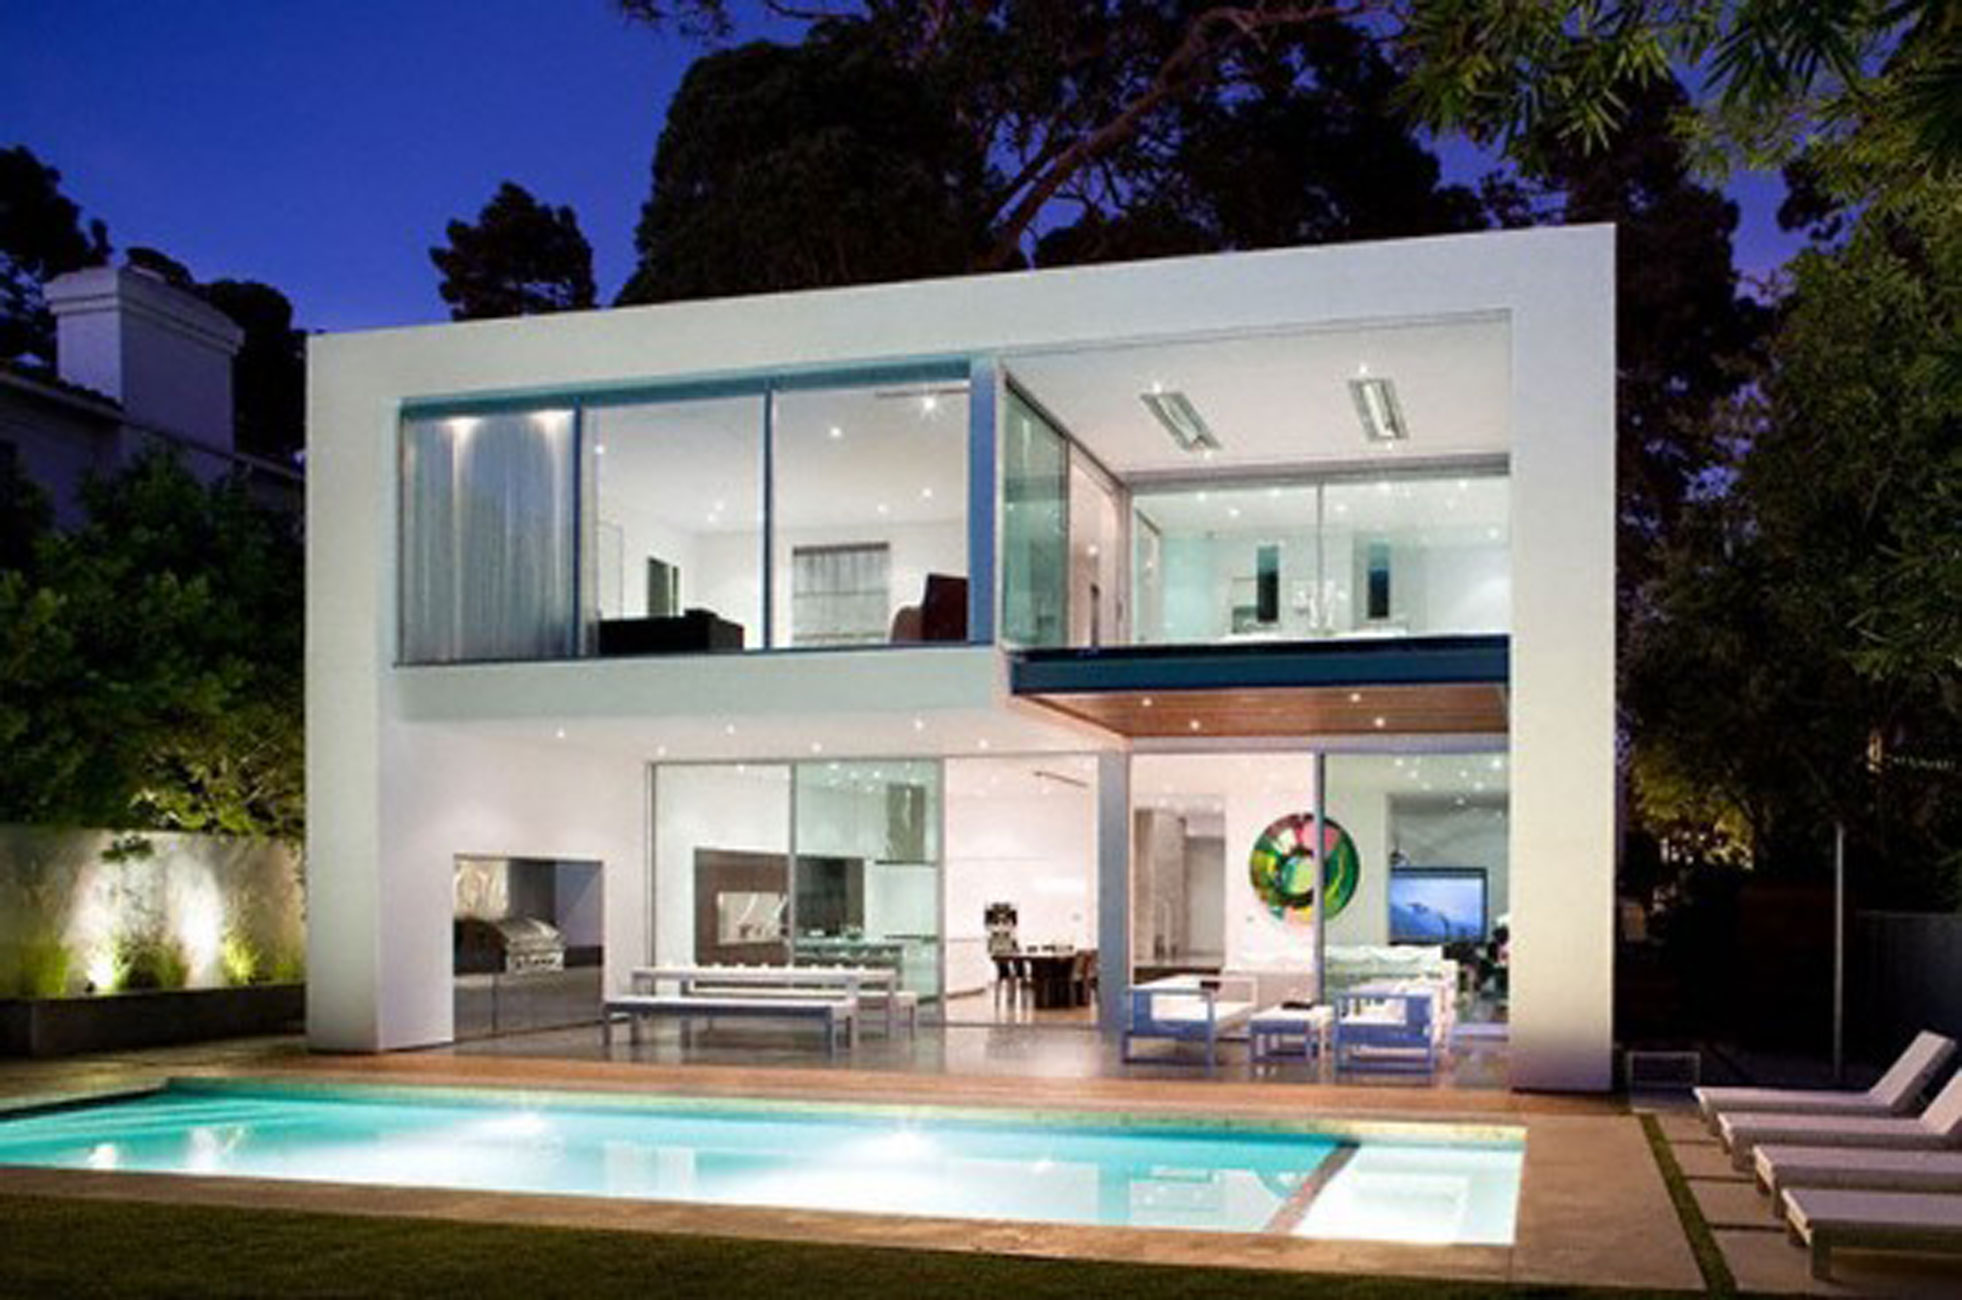 modern home ideas on Modern House Design With Comfortable Interior Ideas   Modern House